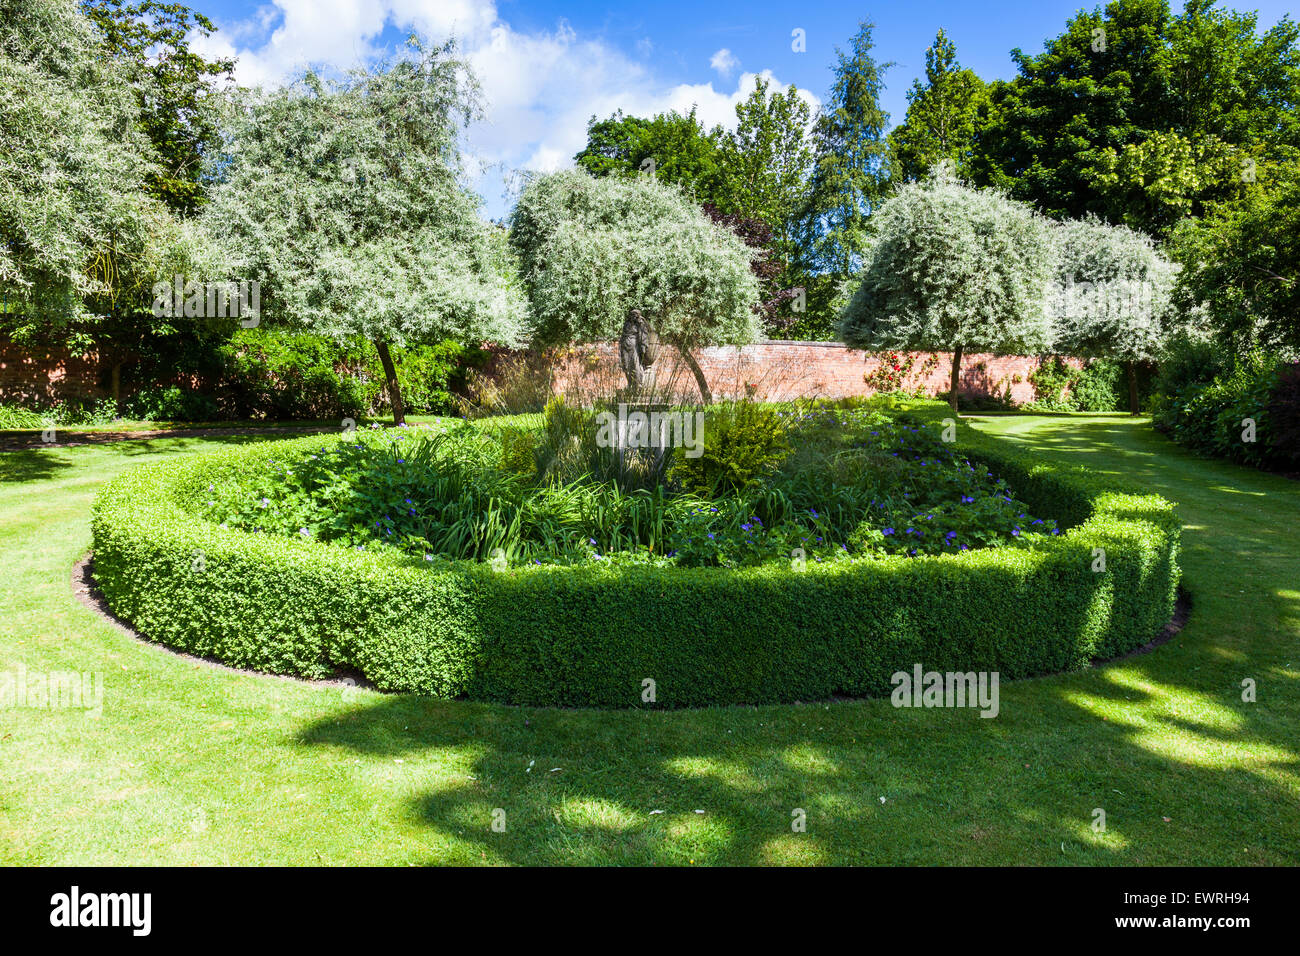 The Tear-drop garden at Weston Park, Weston under Lizard, Shifnal, Shropshire, UK Stock Photo